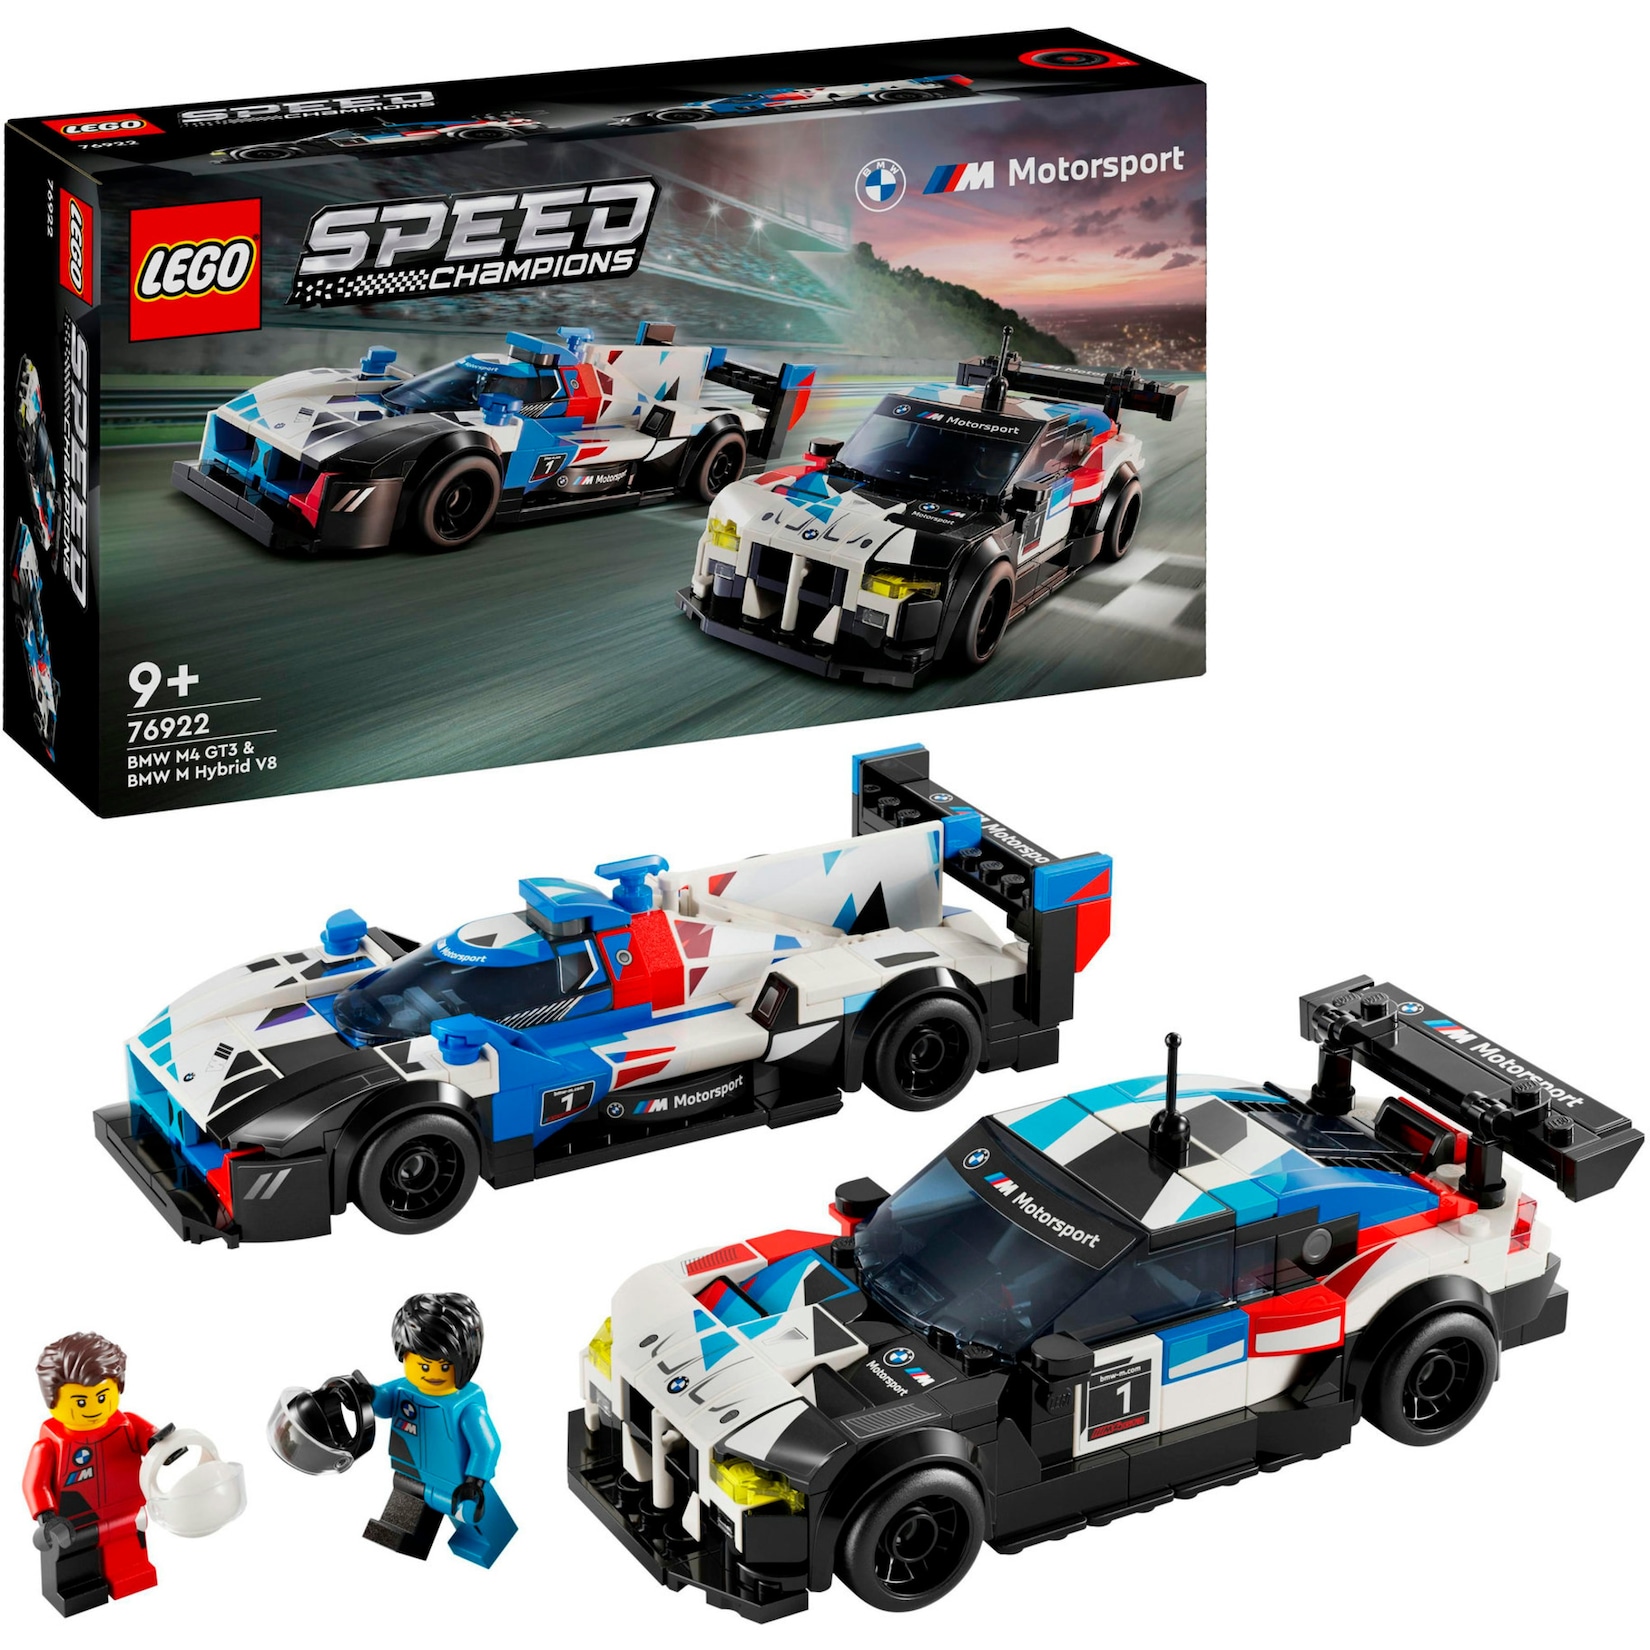 LEGO Konstruktionsspielzeug Speed Champions BMW M4 GT3 & BMW M Hybrid V8 Rennwagen